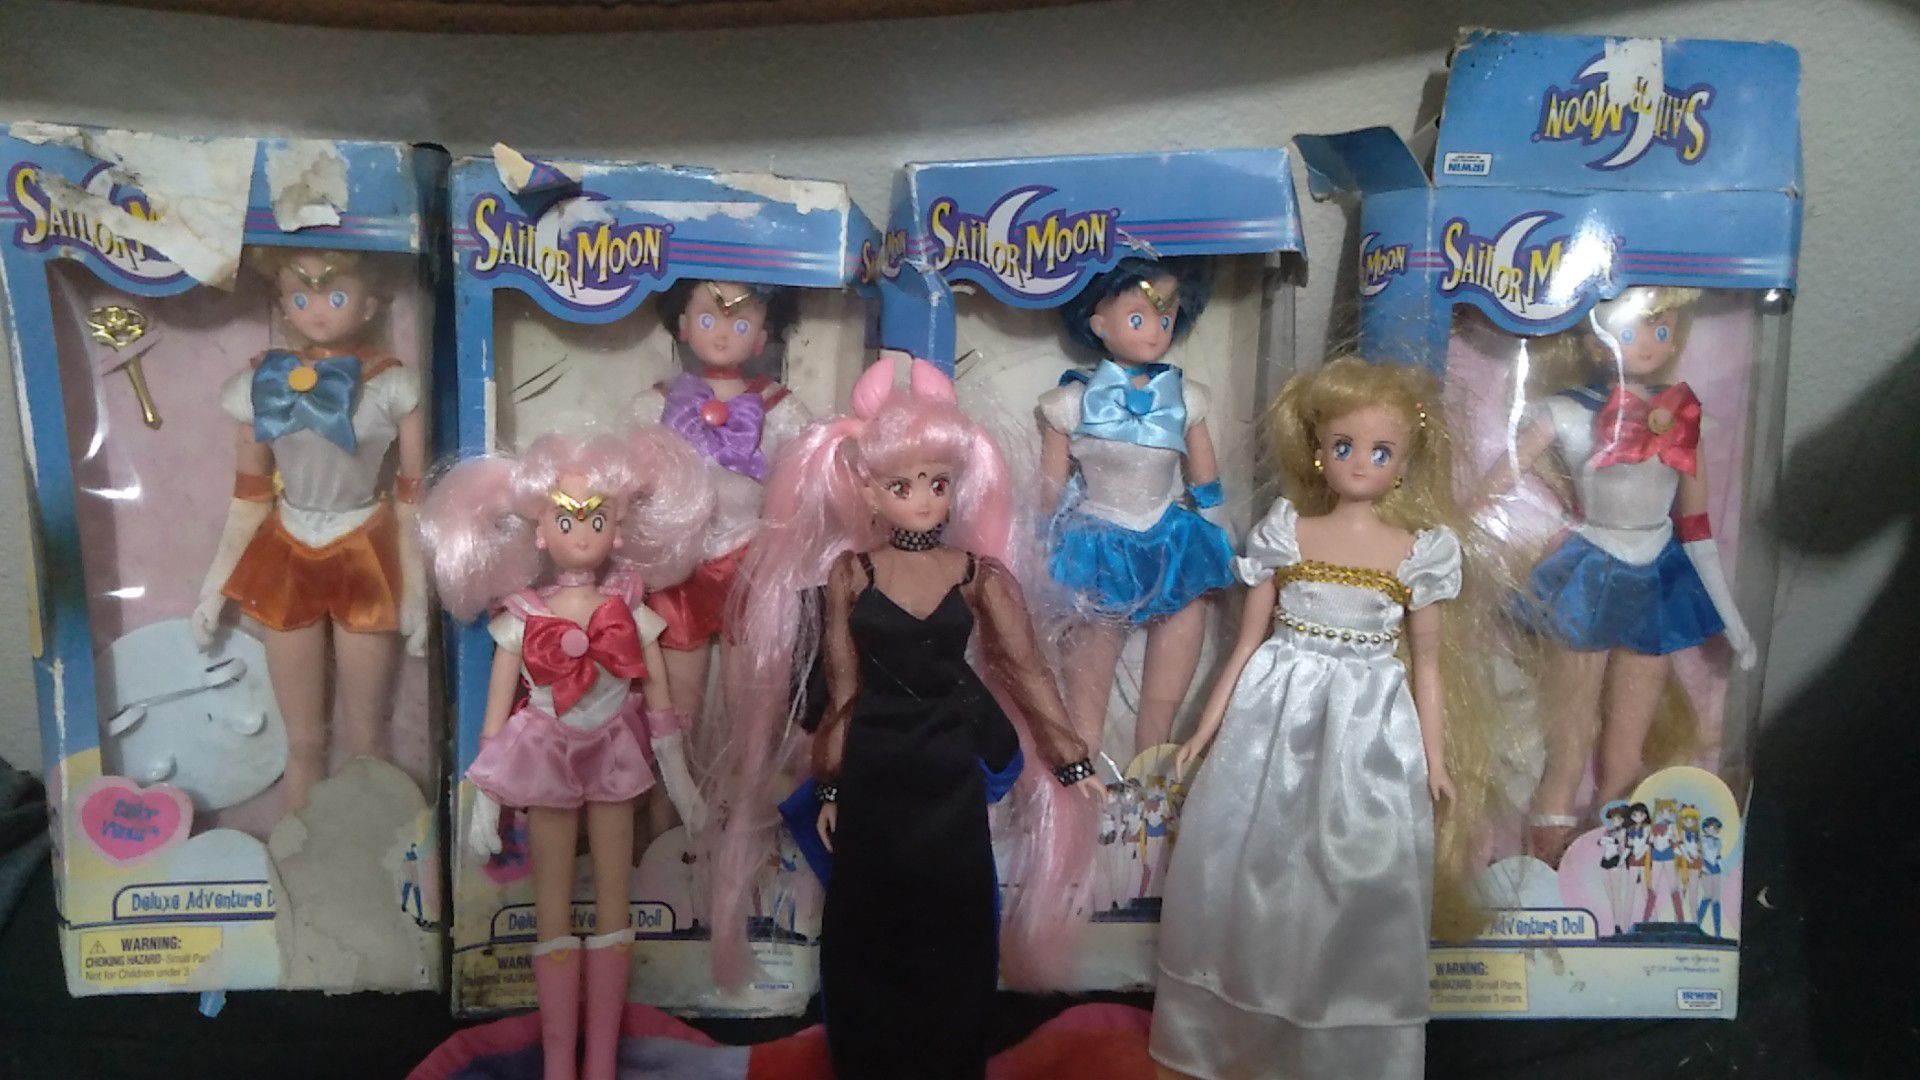 Irwin 2000 Sailor moon doll collection